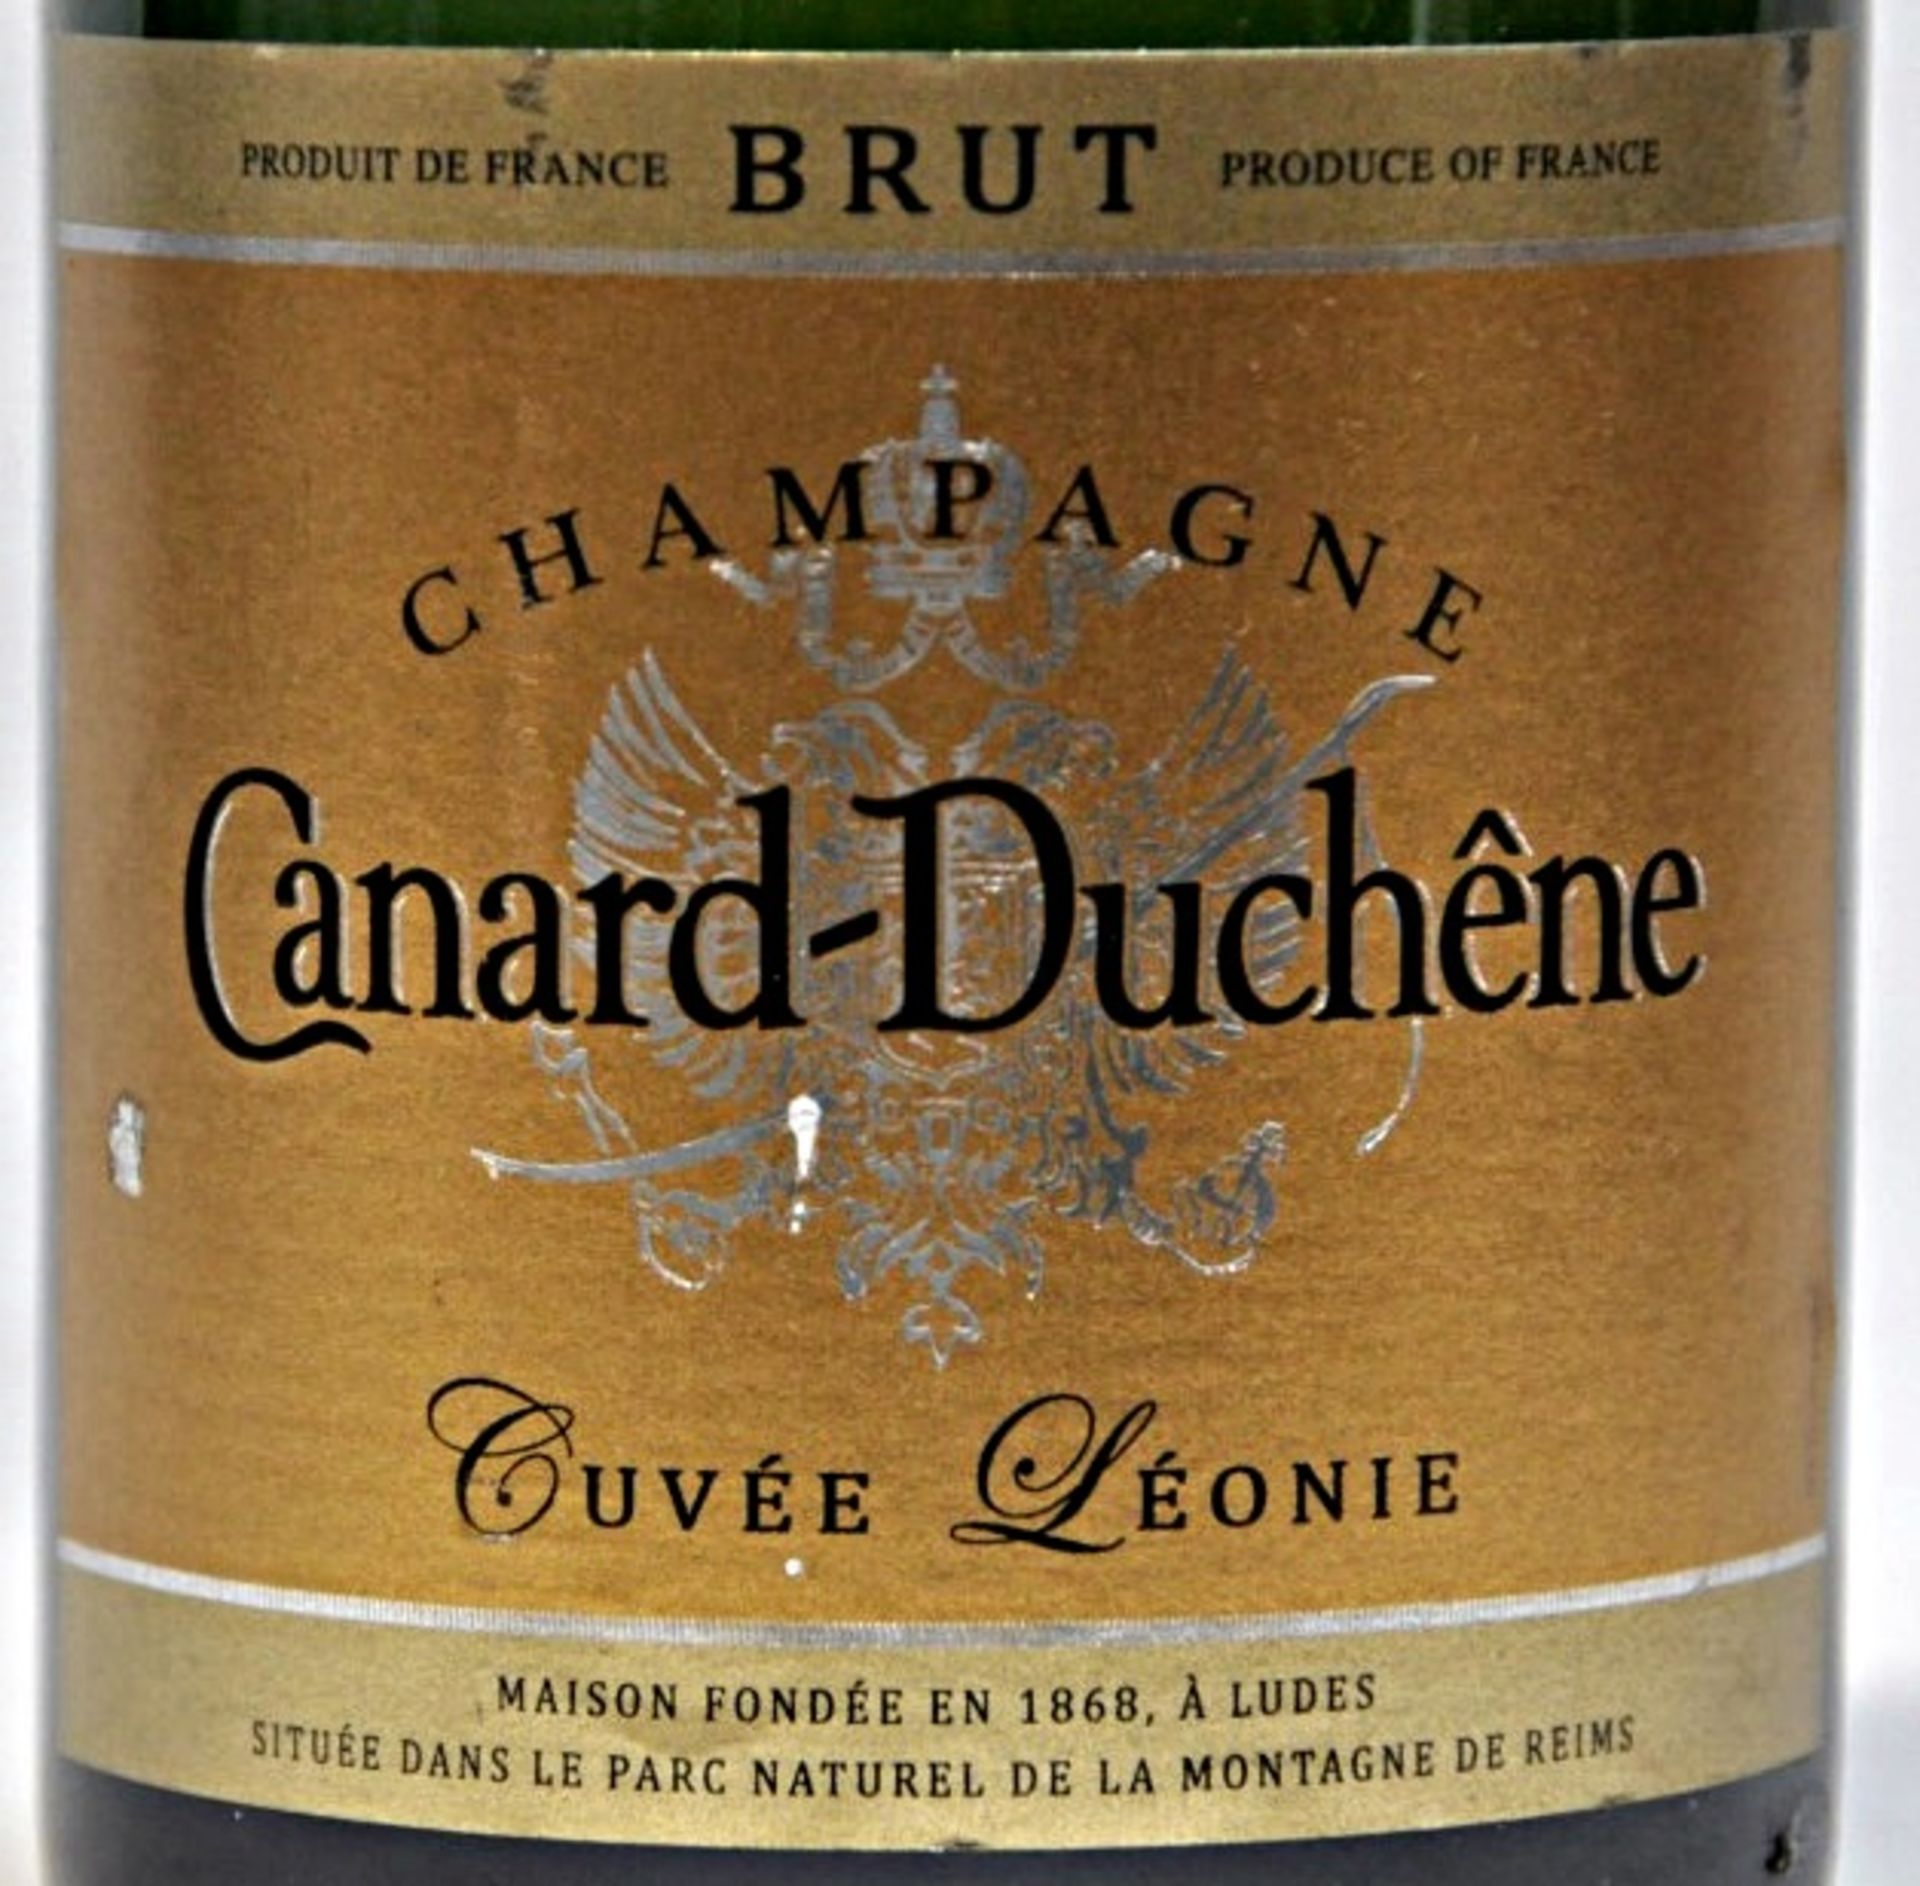 1 x Canard-Duchene Cuvee Leonie Brut, Champagne, France – NV - Bottle Size 75cl – Volume 12% - Ref - Image 3 of 5